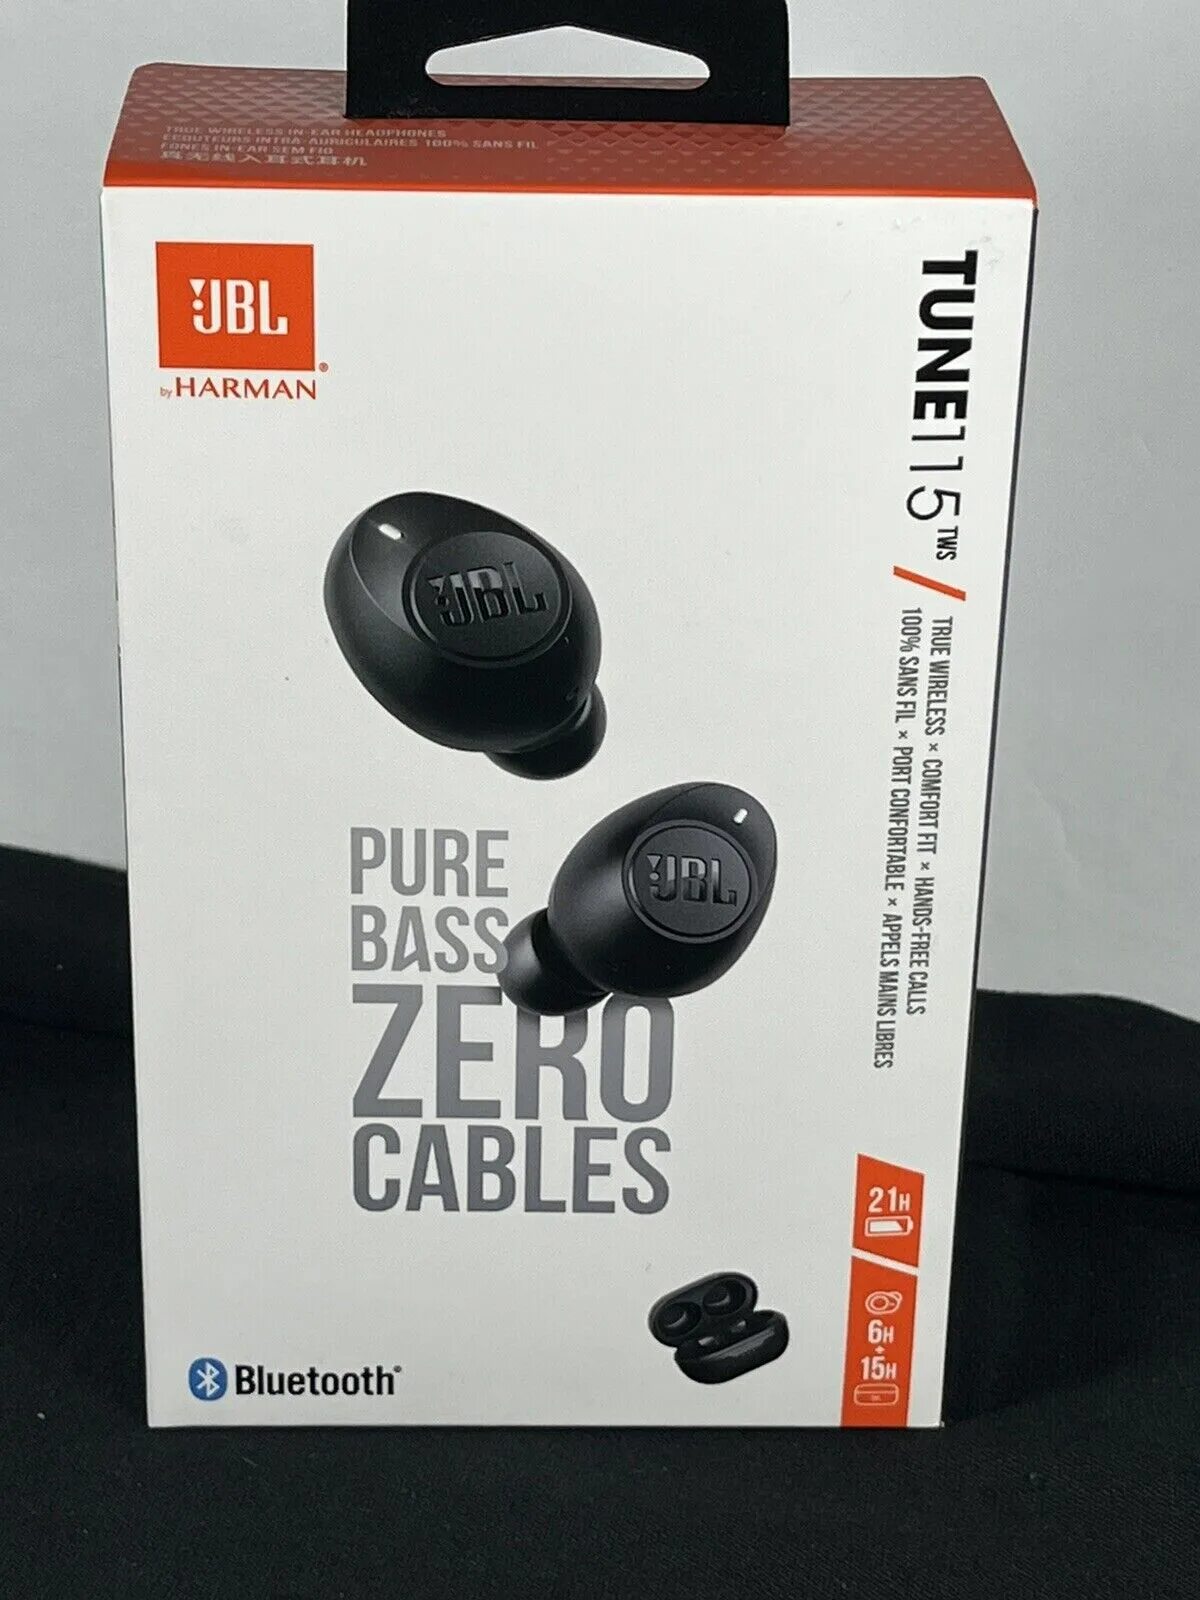 Pure bass zero. JBL Harman Pure Bass. JBL Pure Bass Zero Cables. Наушники JBL Pure Bass Zero Cables. Pure Bass Zero Cables JBL цена.